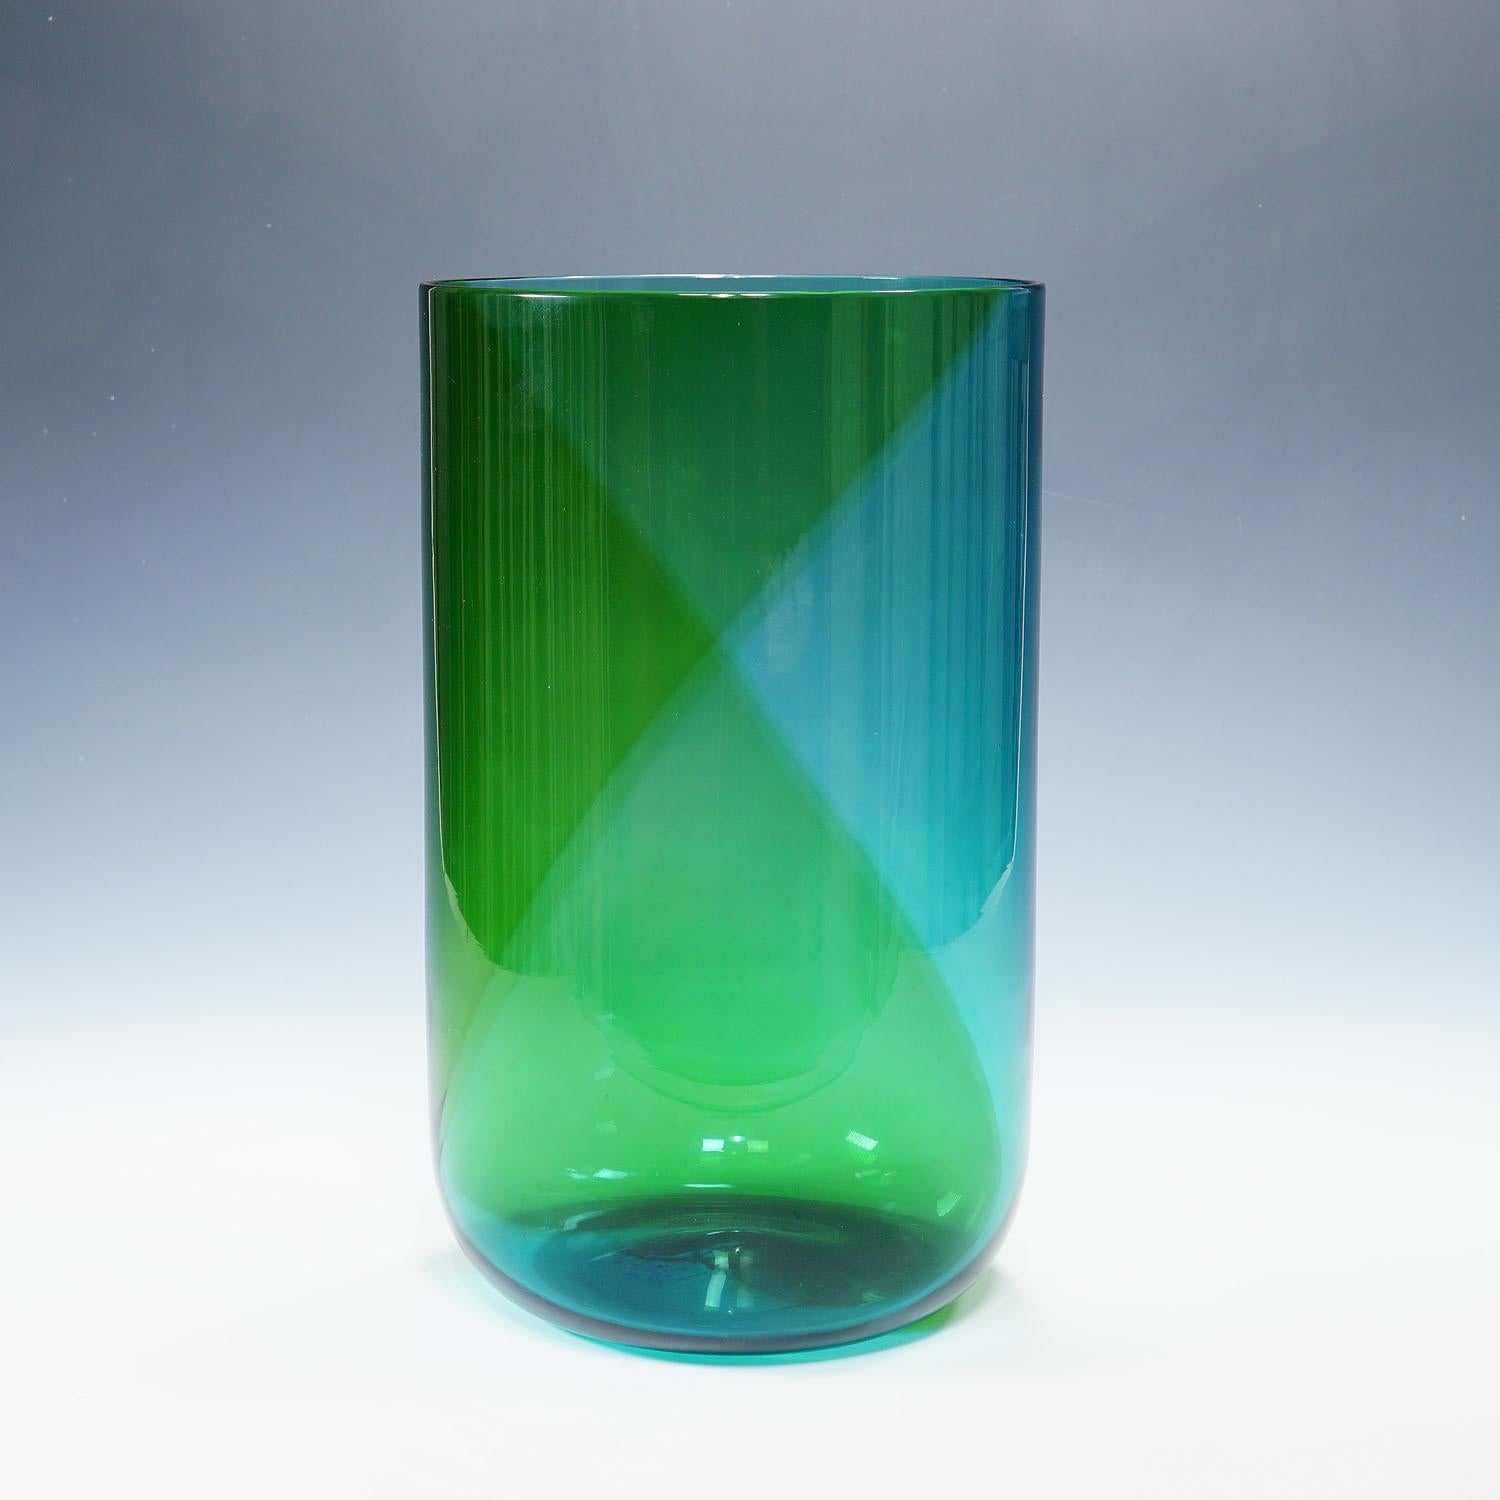 Large Venini Vase 'Coreano', Designed by Tapio Wirkkala in 1966

A blue and green a fasce a spirale vase from the Coreani series. Designed in 1966 by Tapio Wirkkala for Venini. Produced 1983 by Venini, Murano. Incised signature 